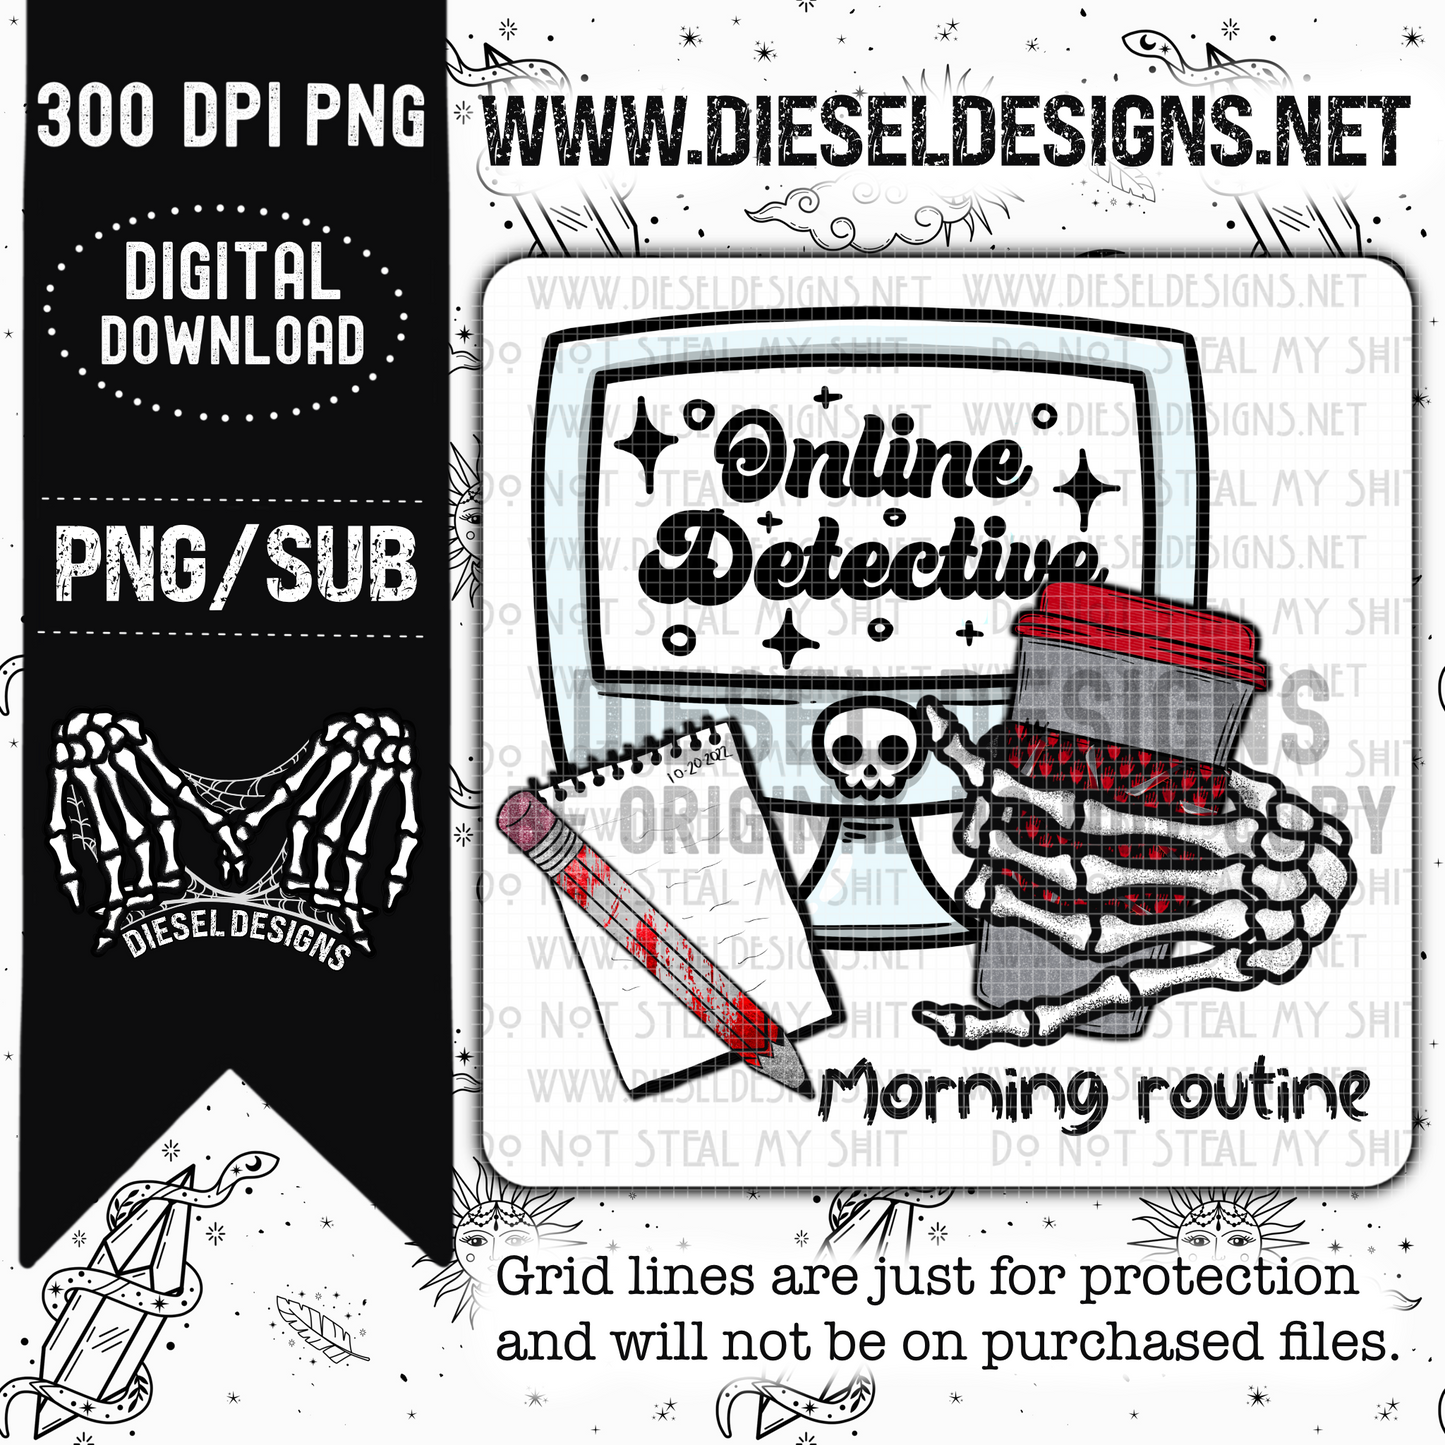 Morning Routine PNG  | 300 DPI | Transparent PNG